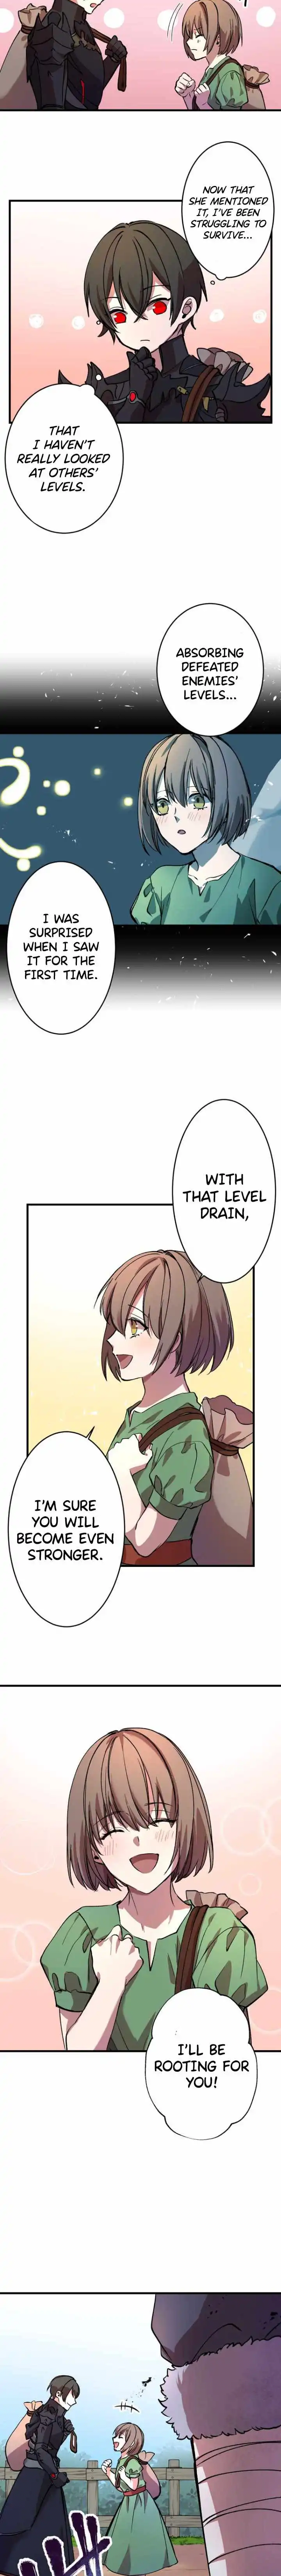 Level Drain (Manga) Chapter 5